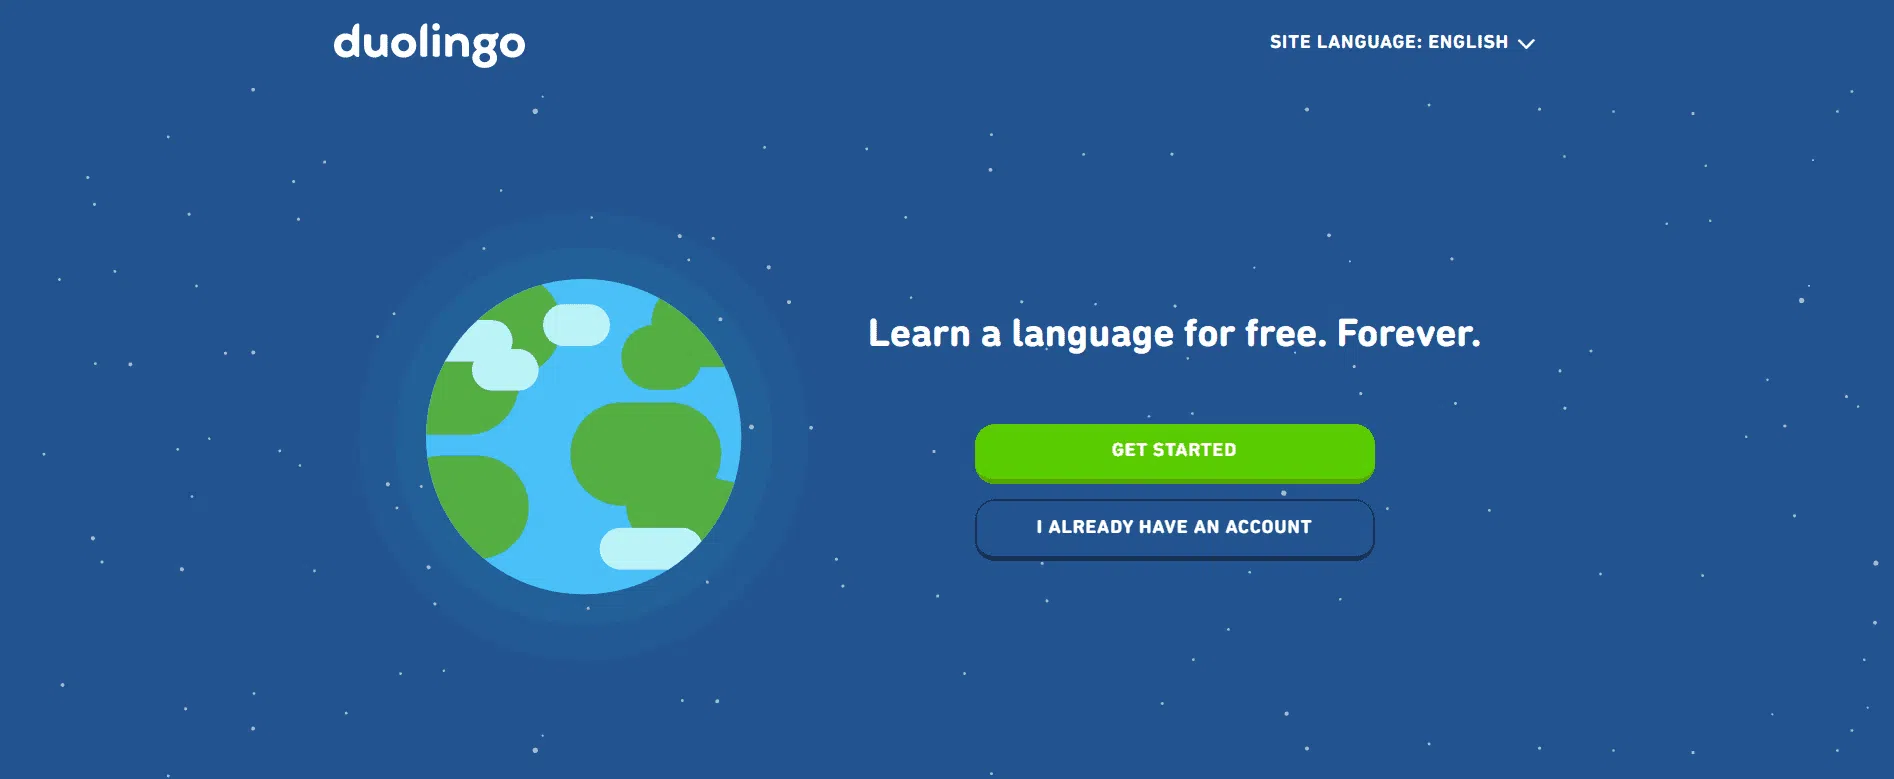 Duolingo-Overview